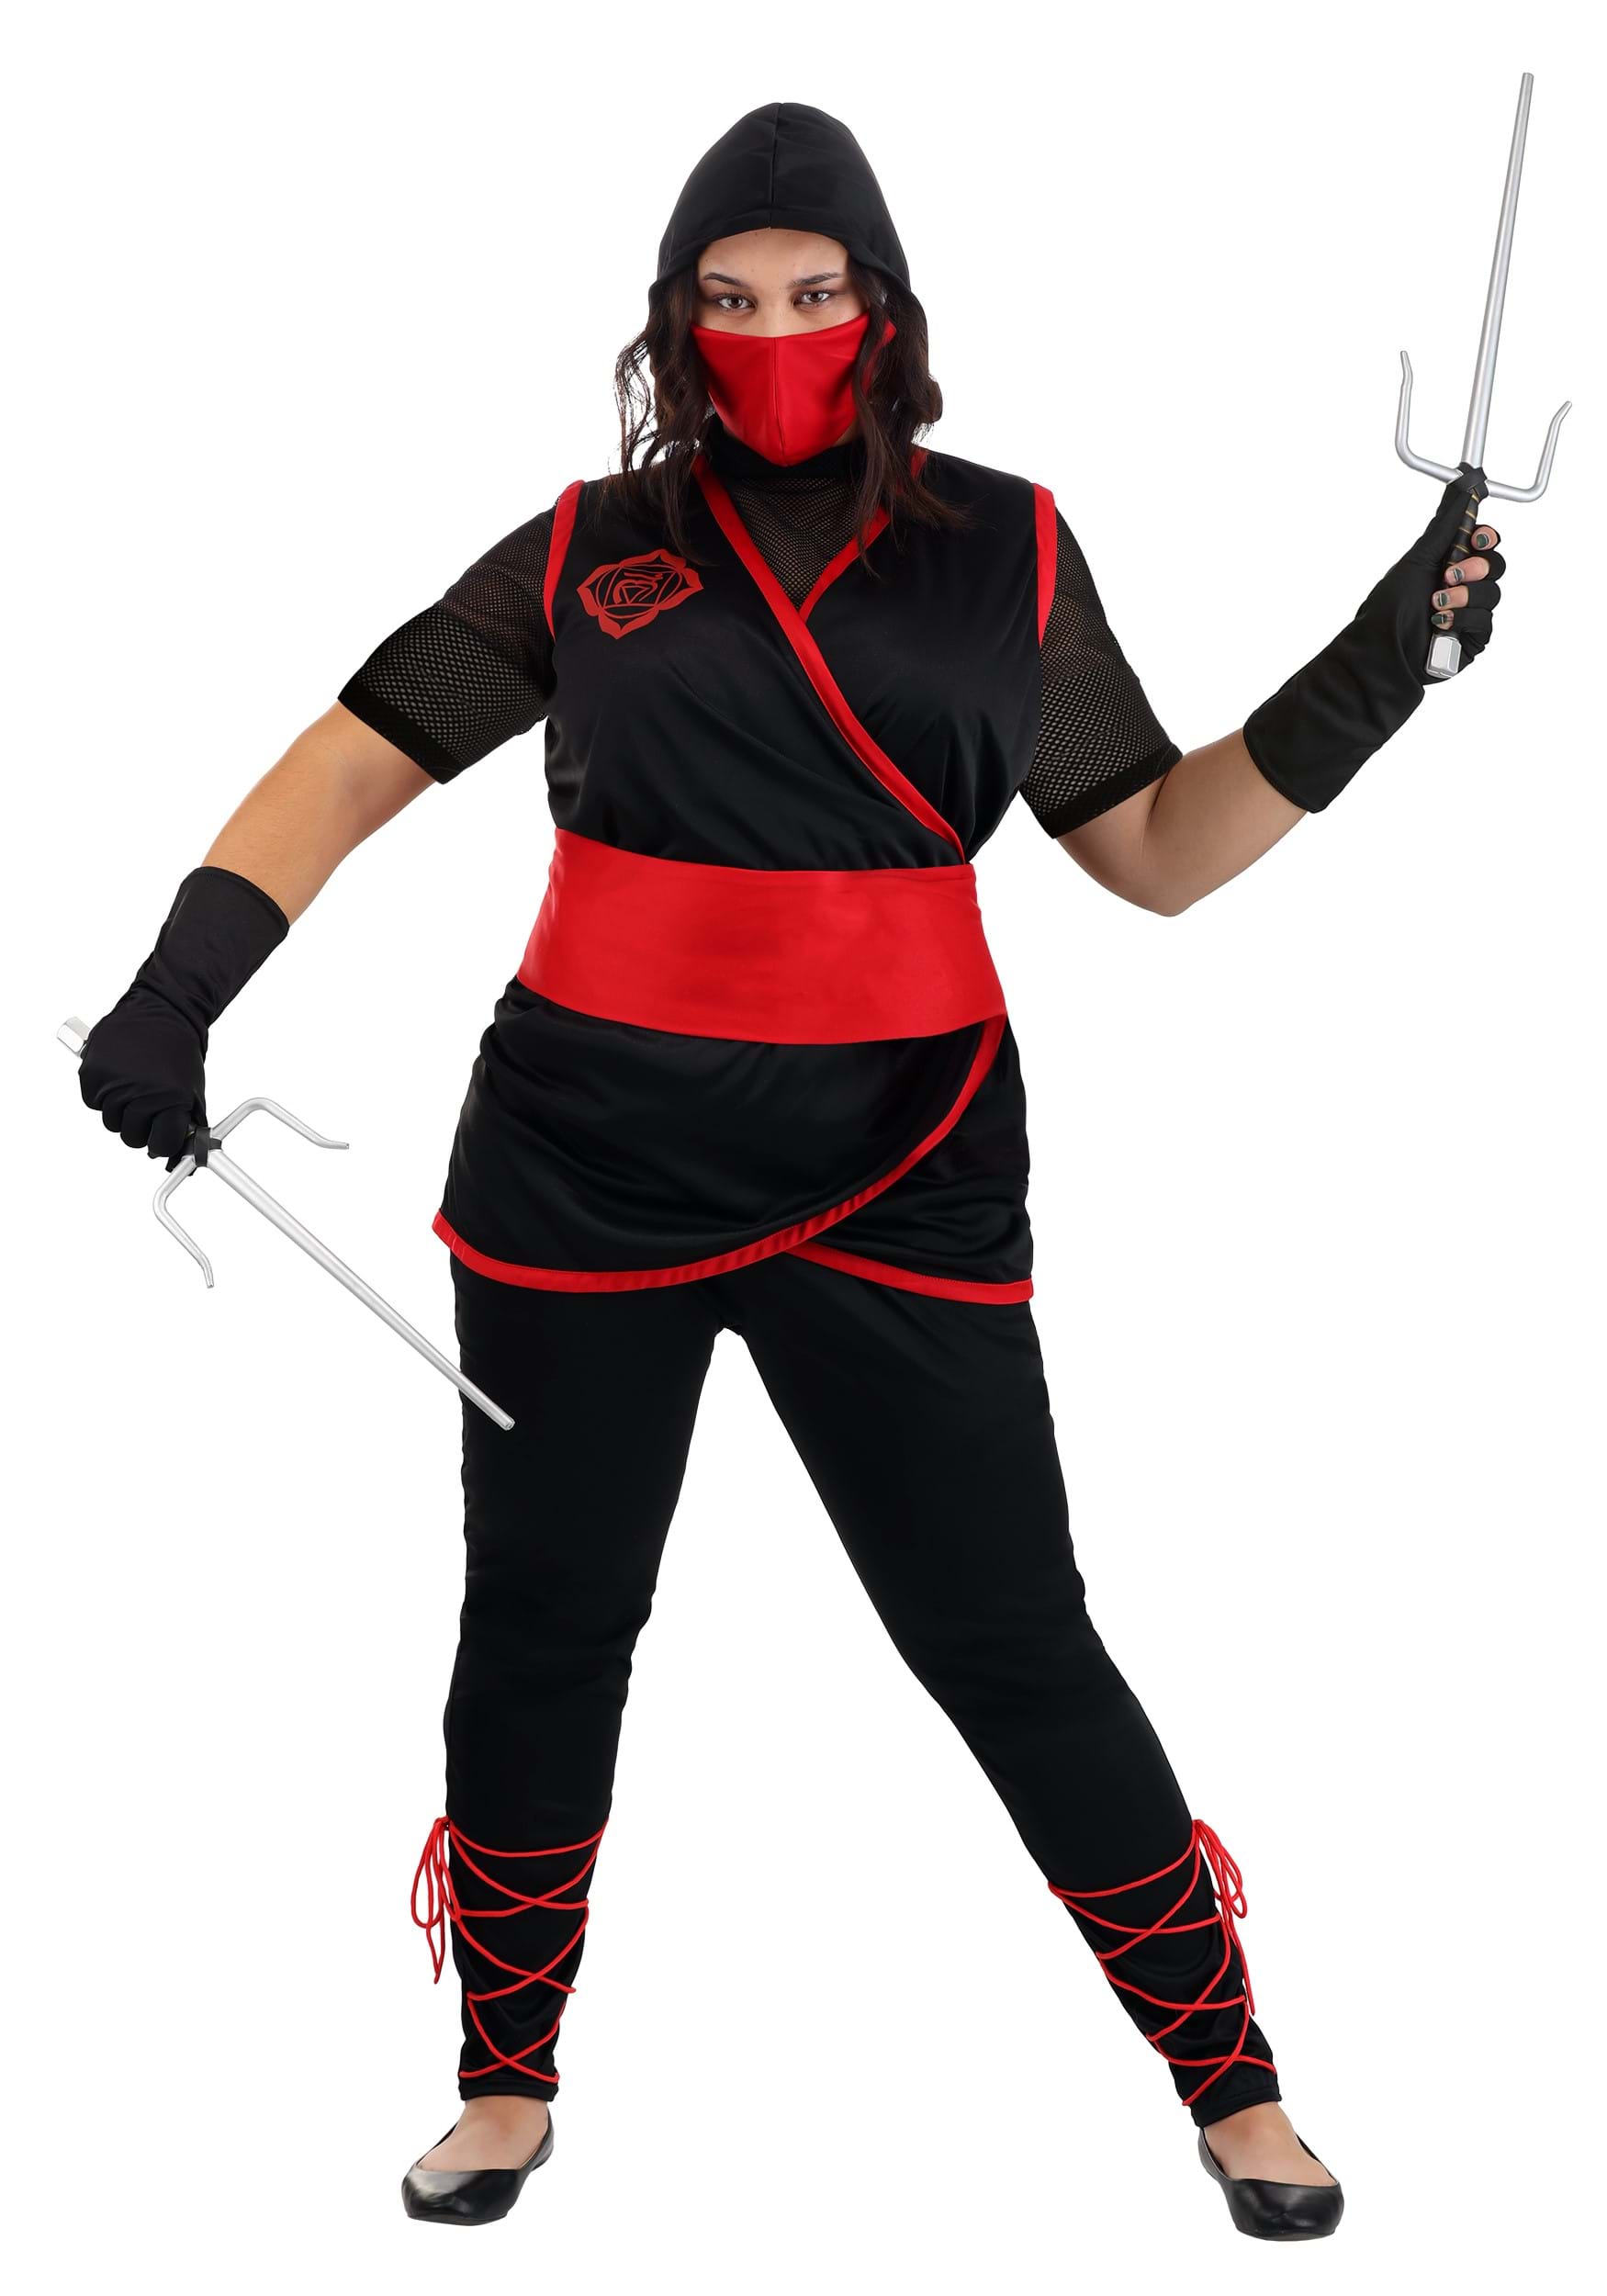 https://images.halloweencostumes.com/products/71244/1-1/stealth-ninja-costume.jpg